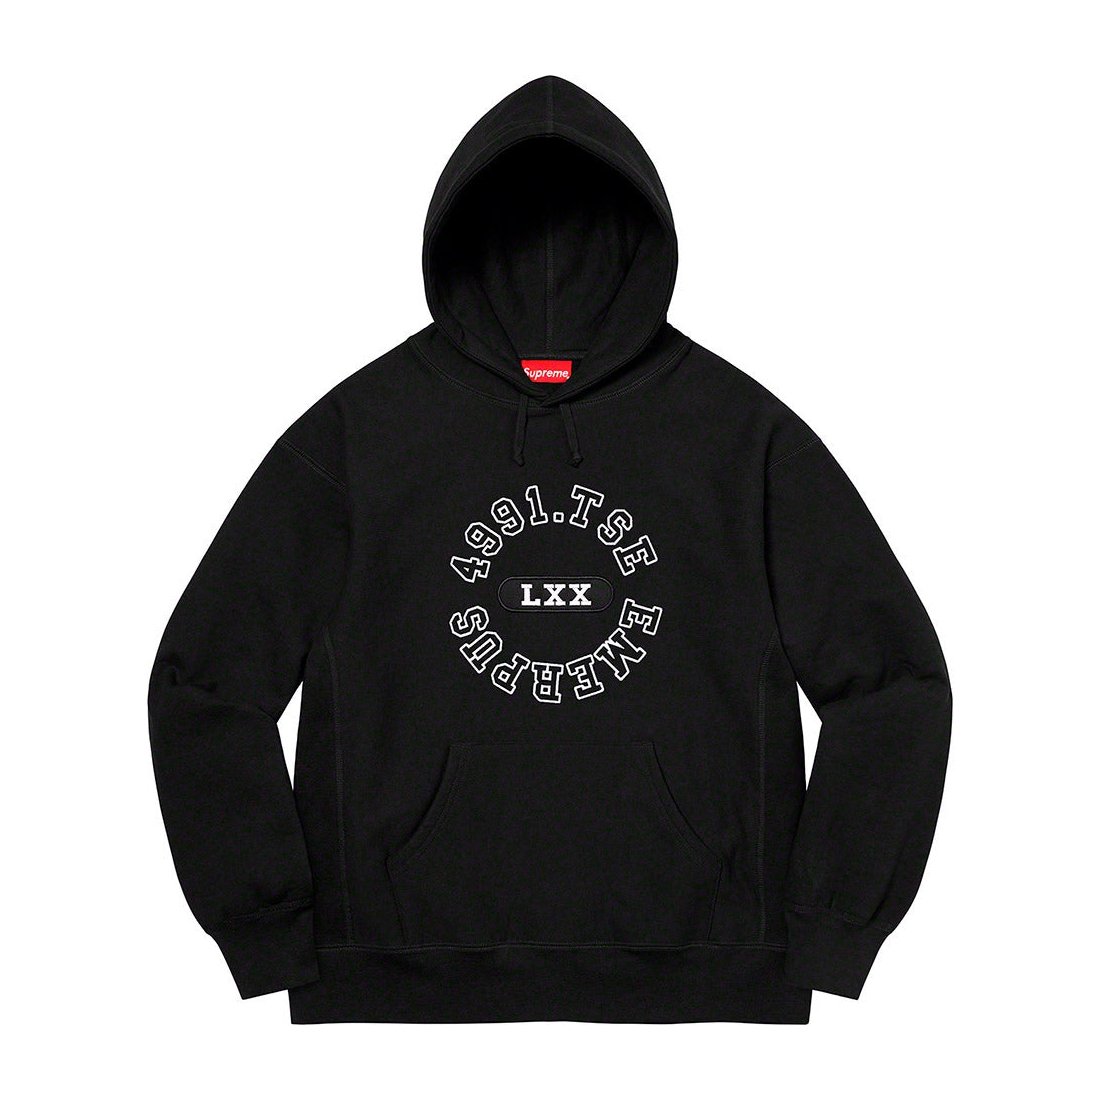 Details on Reverse Hooded Sweatshirt Black from spring summer 2023 (Price is $158)